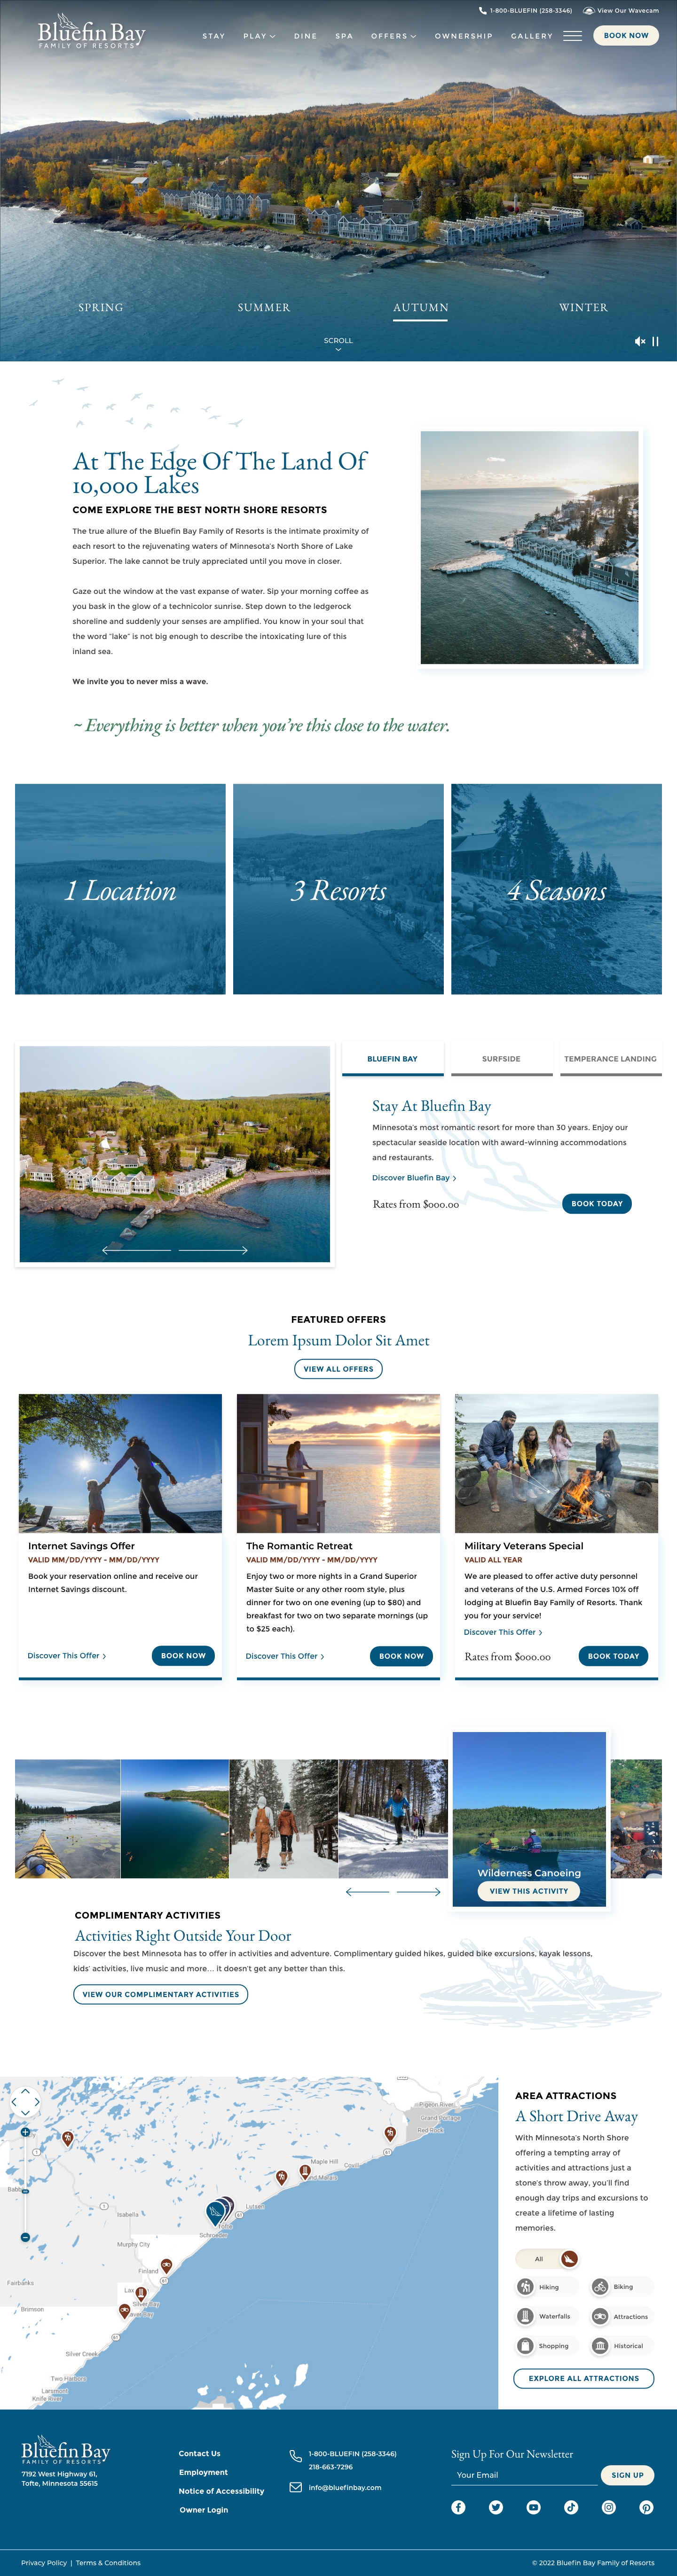 Bluefin Bay - Home Page Design